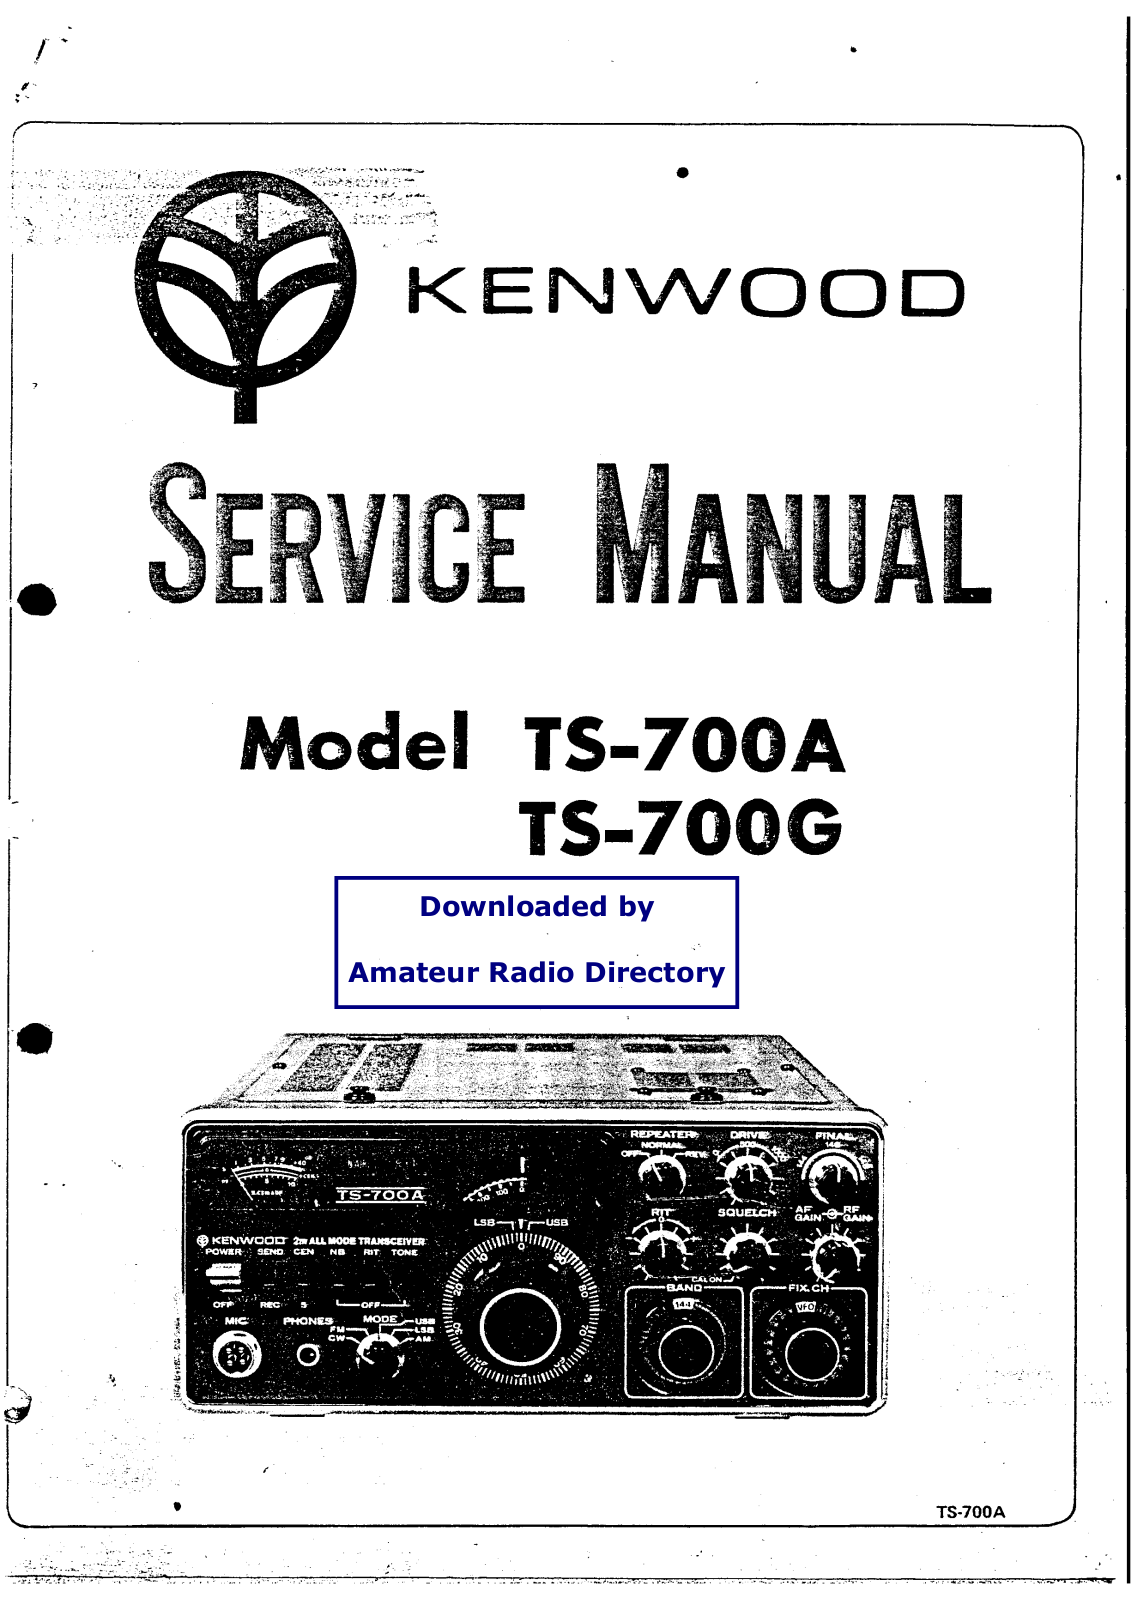 Kenwood ts 700g schematic